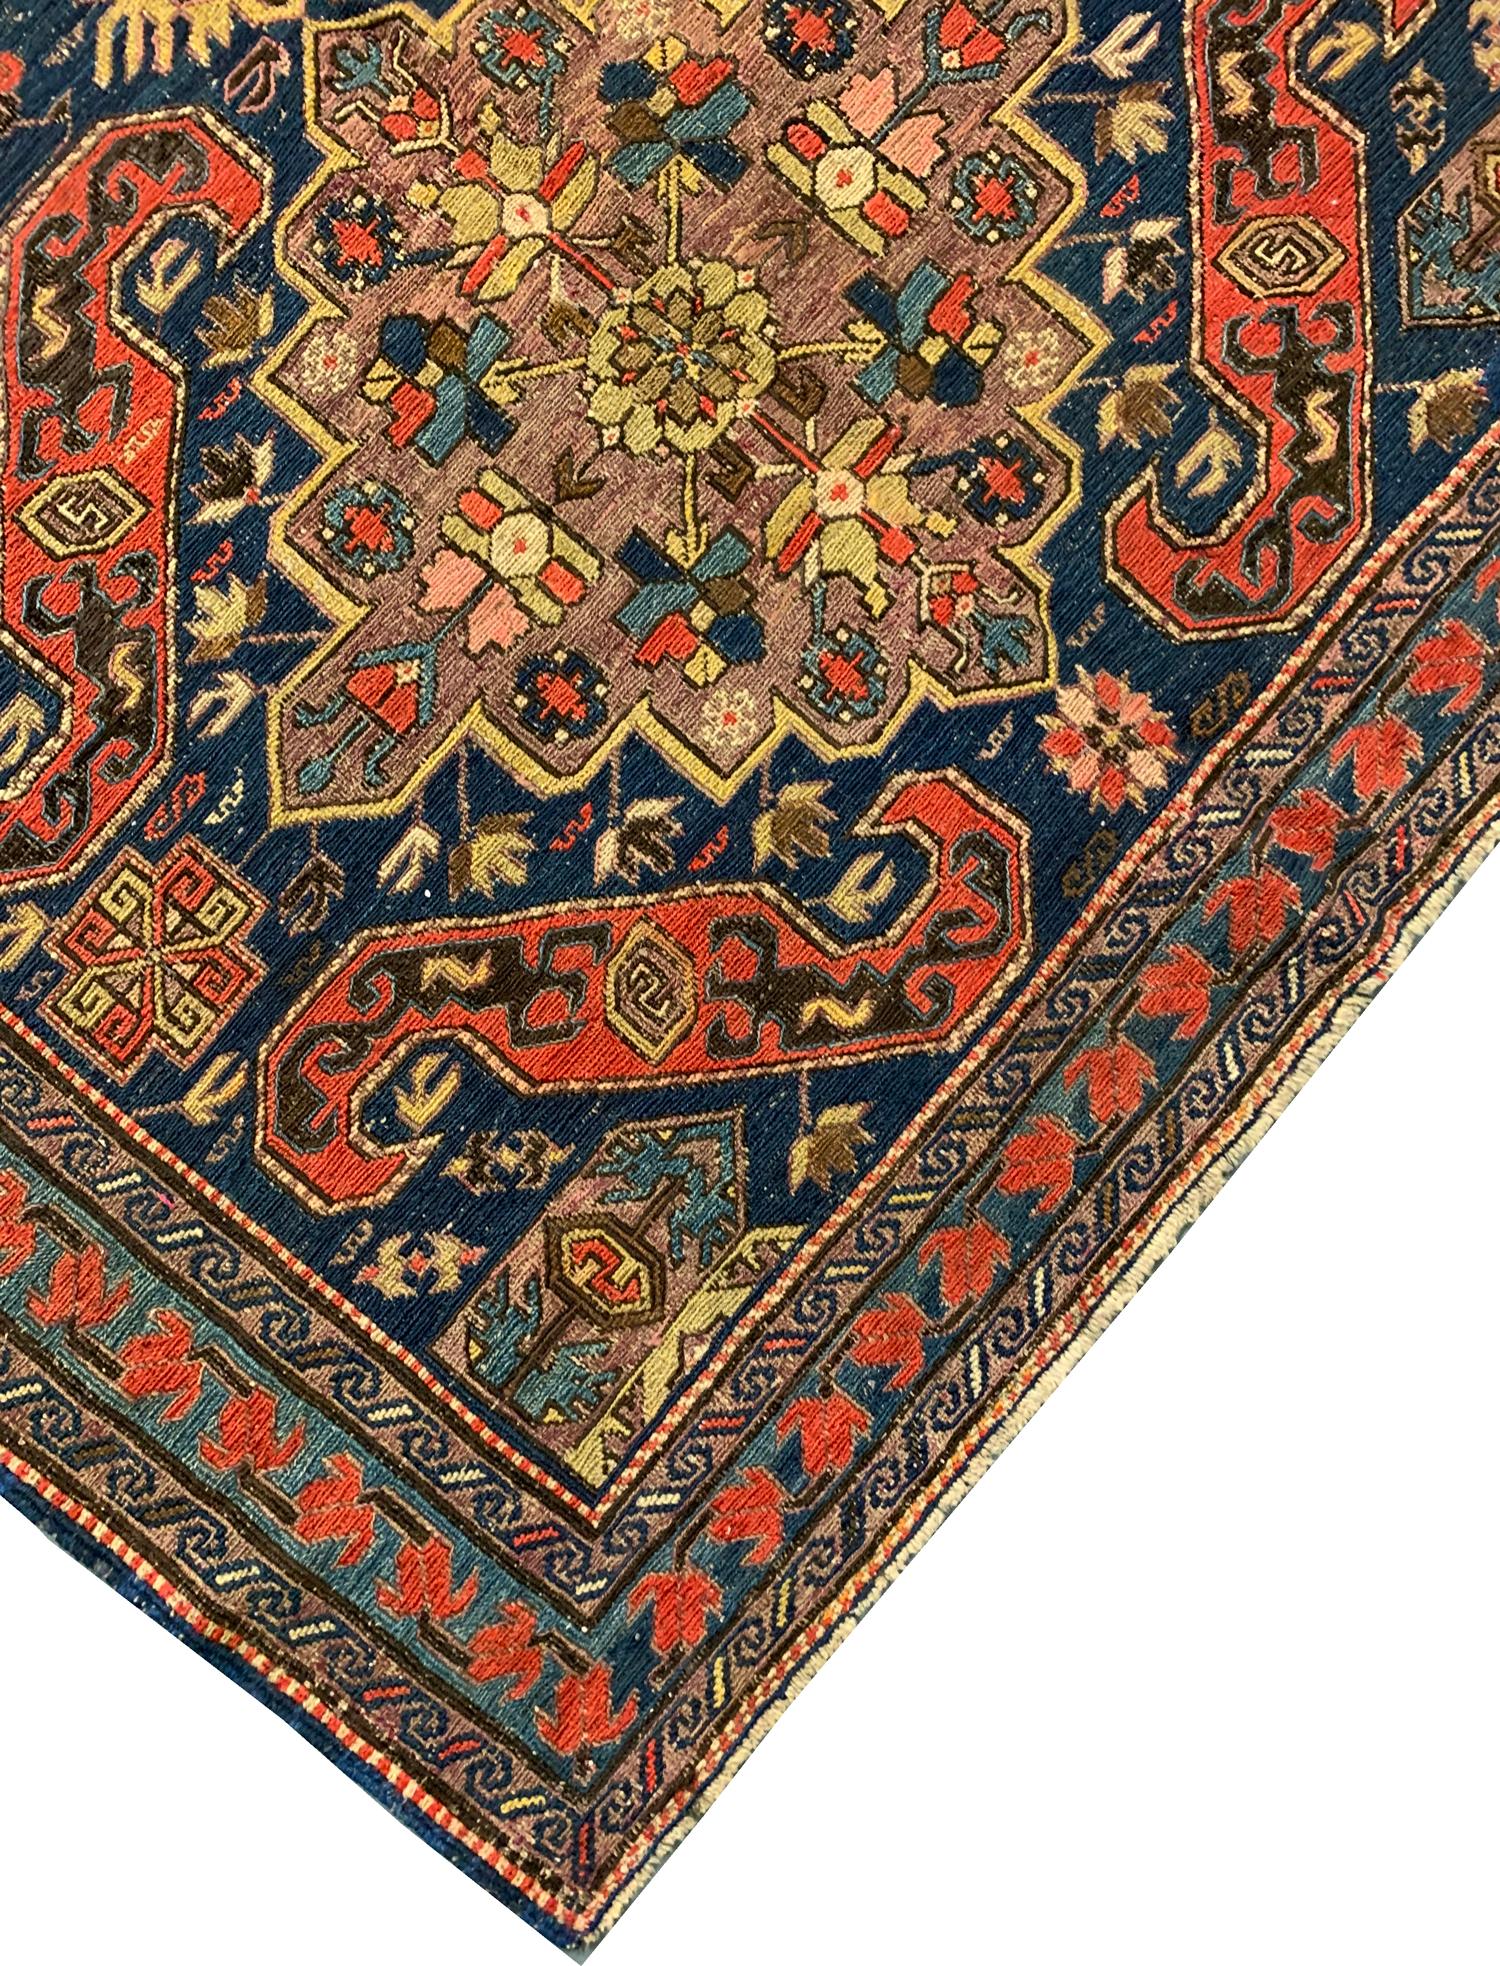 Needlework Handwoven Sumakh Kilims Caucasian Antique Carpet Rust Wool Area Rug For Sale